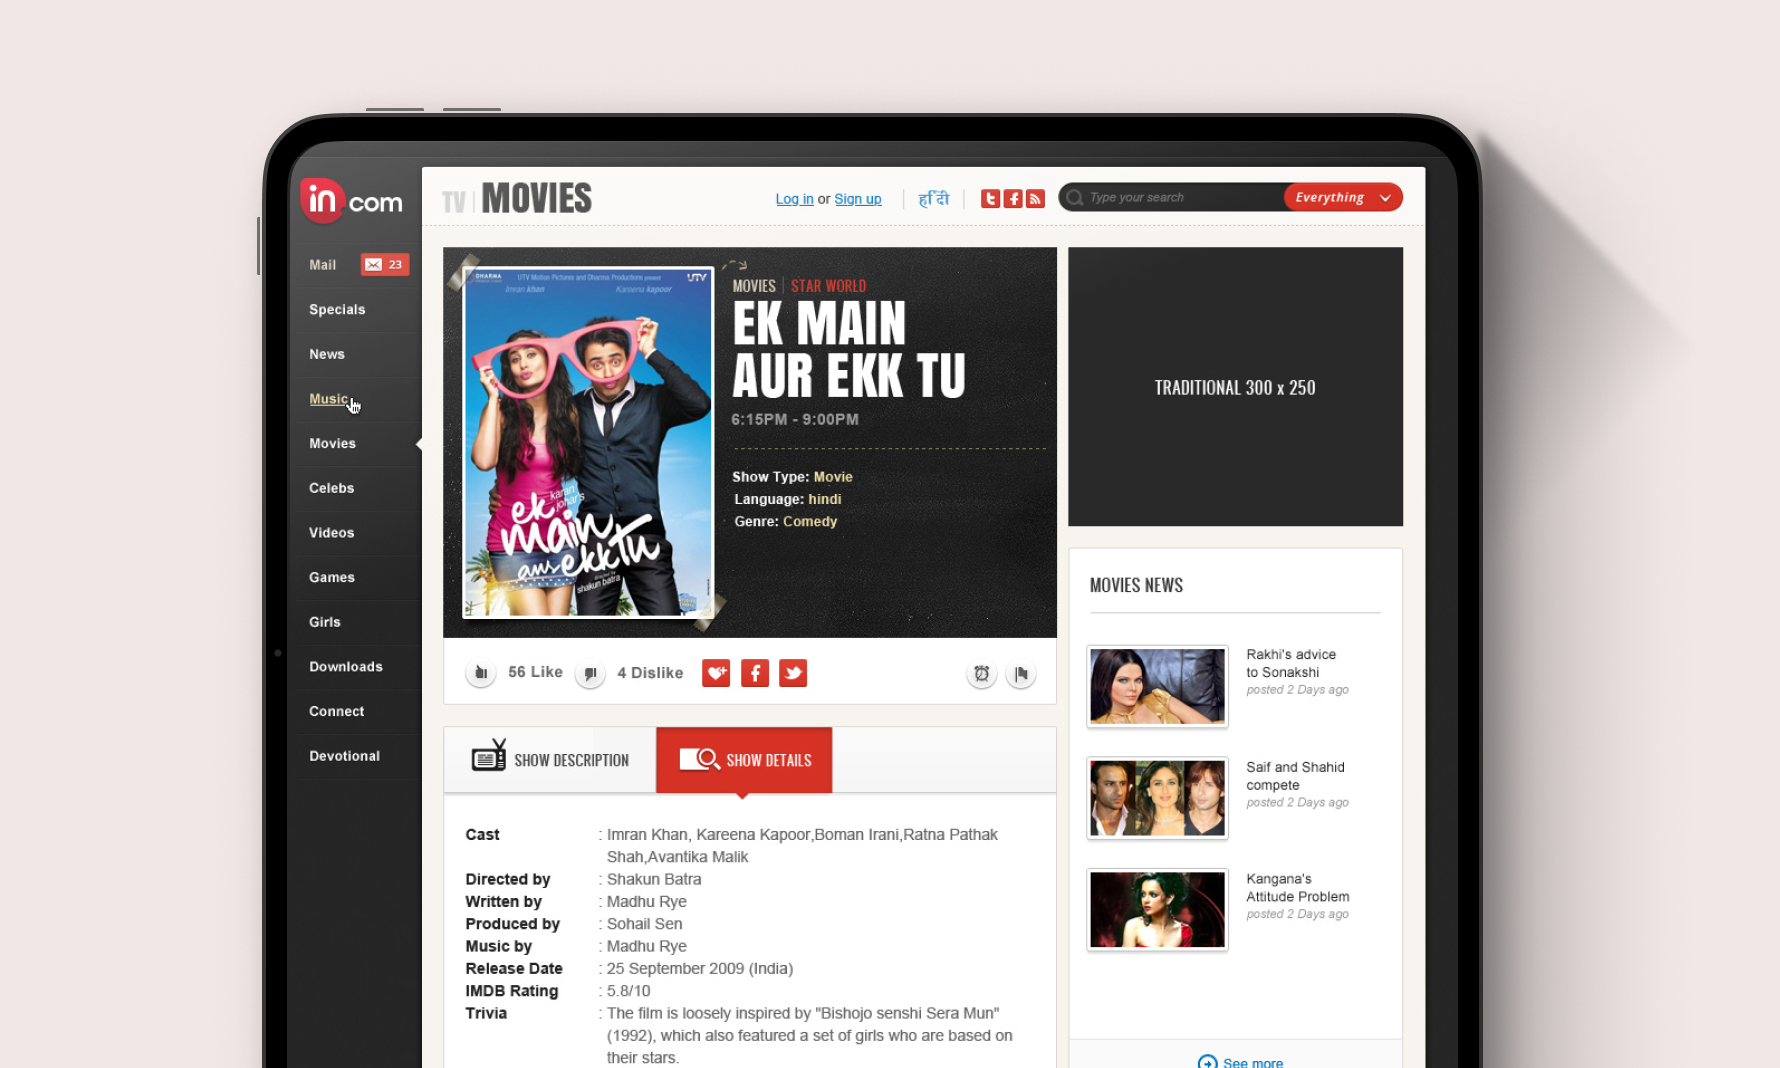 in.com Movie page UI